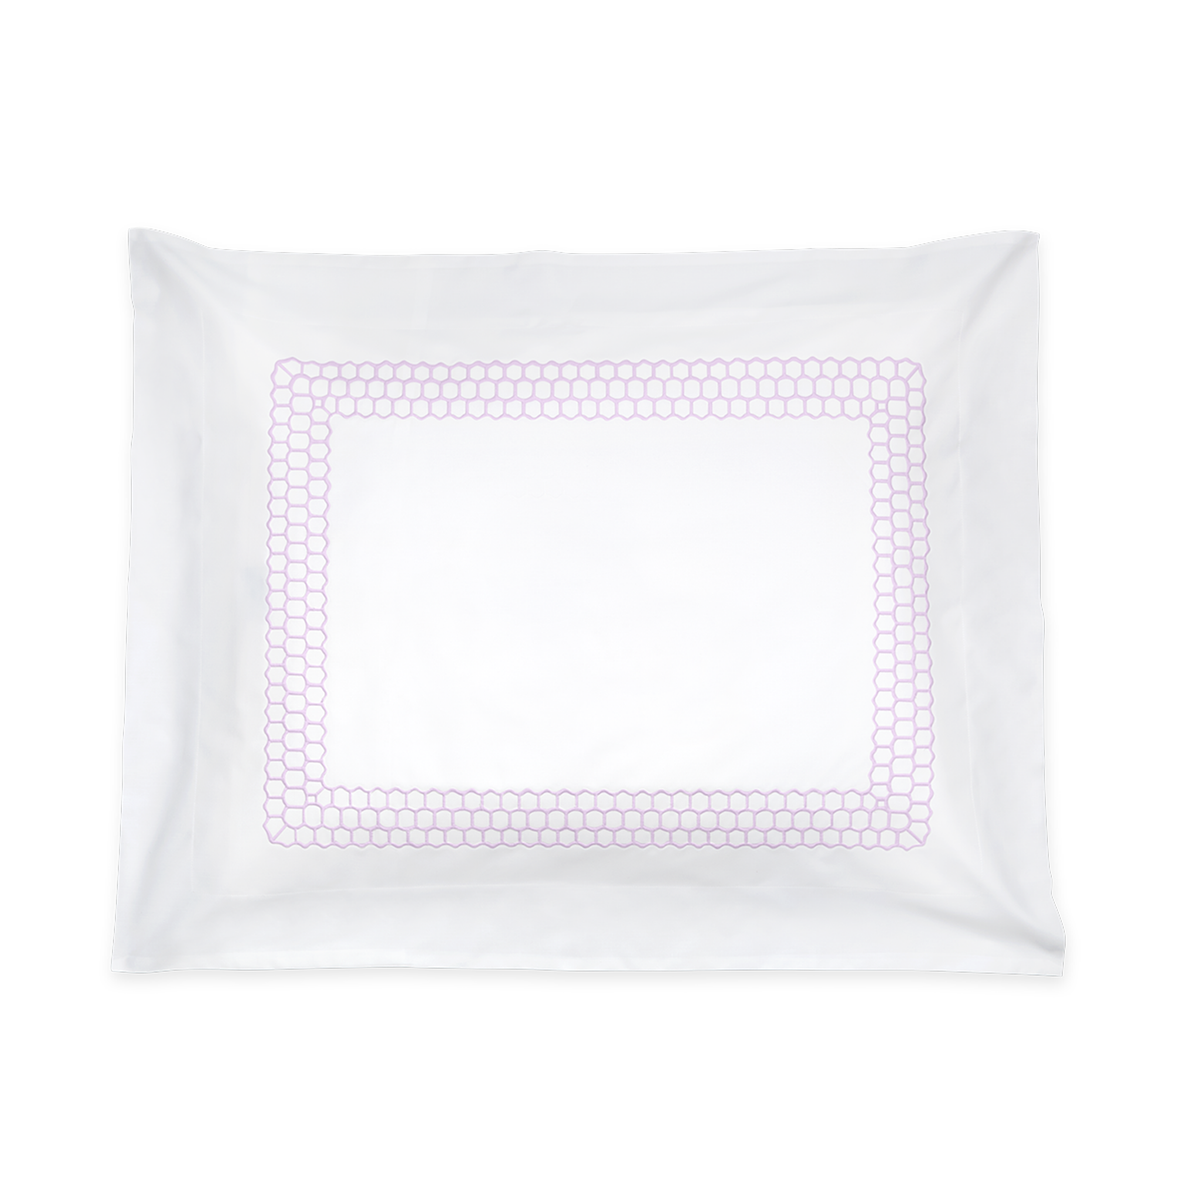 Clear Image of Matouk Liana Bedding Standard Sham in Lavender Color